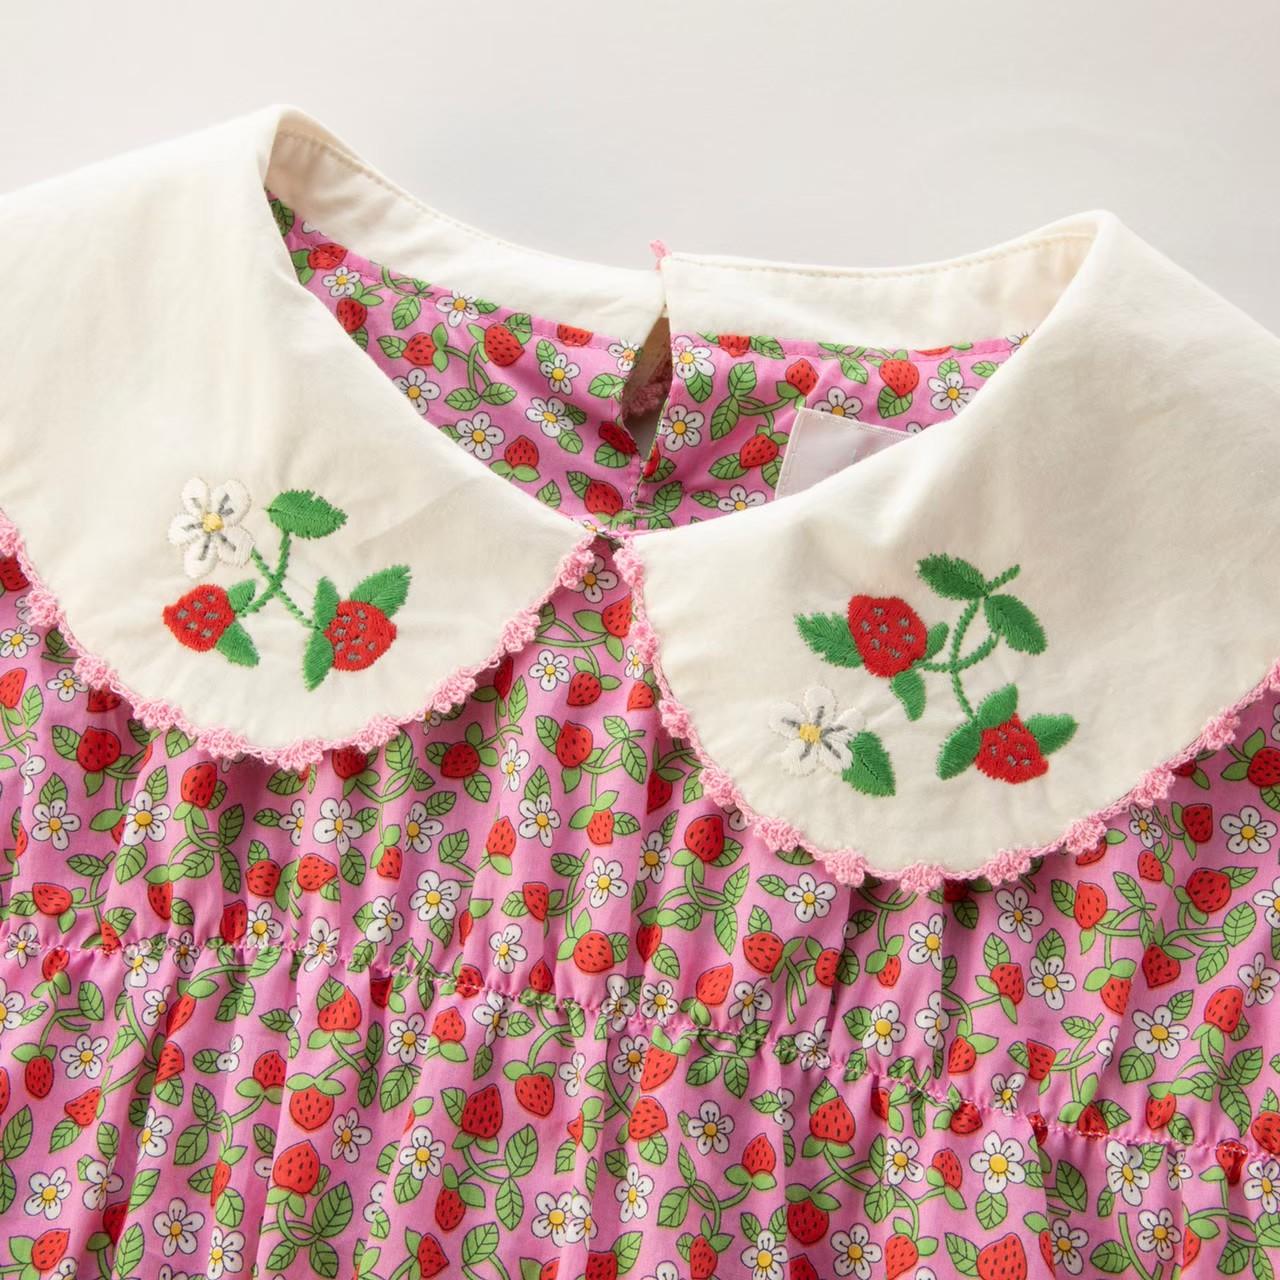 Strawberries and cream embroidery カラードレス